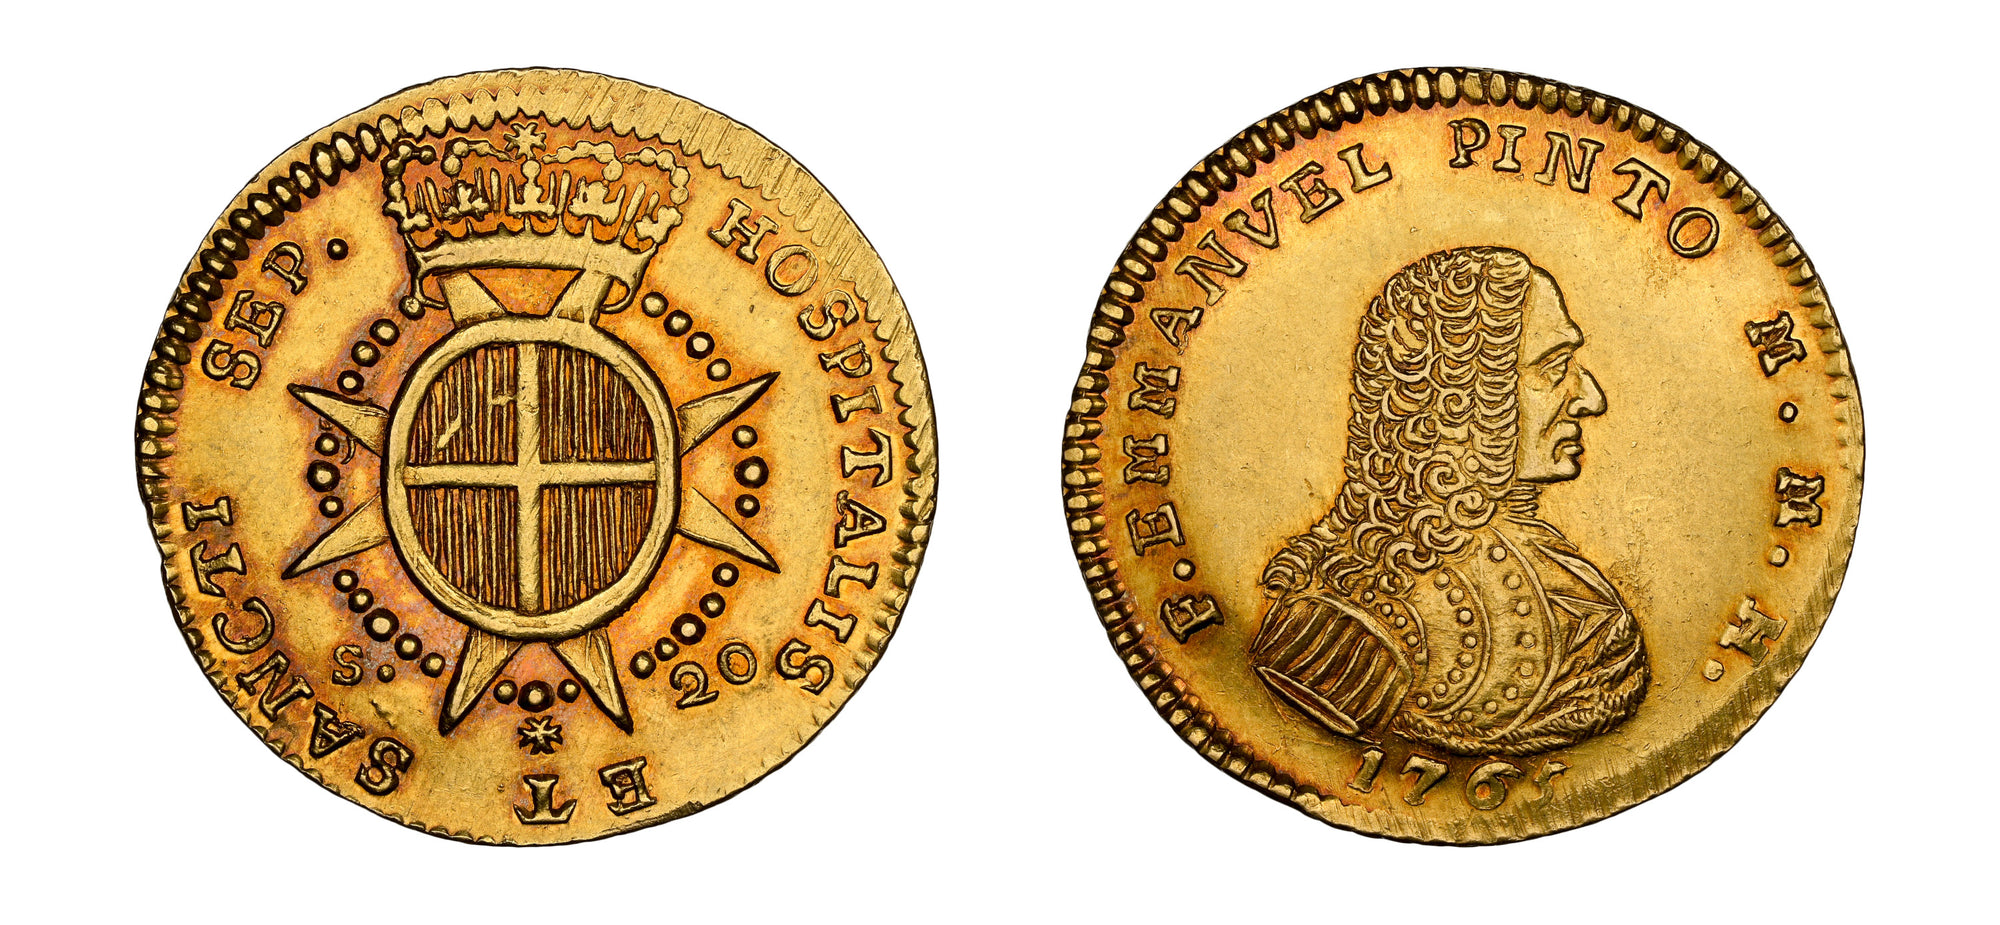 1765 Gold 20 Scudi Order of Malta NGC AU58 - Hard Asset Management, Inc